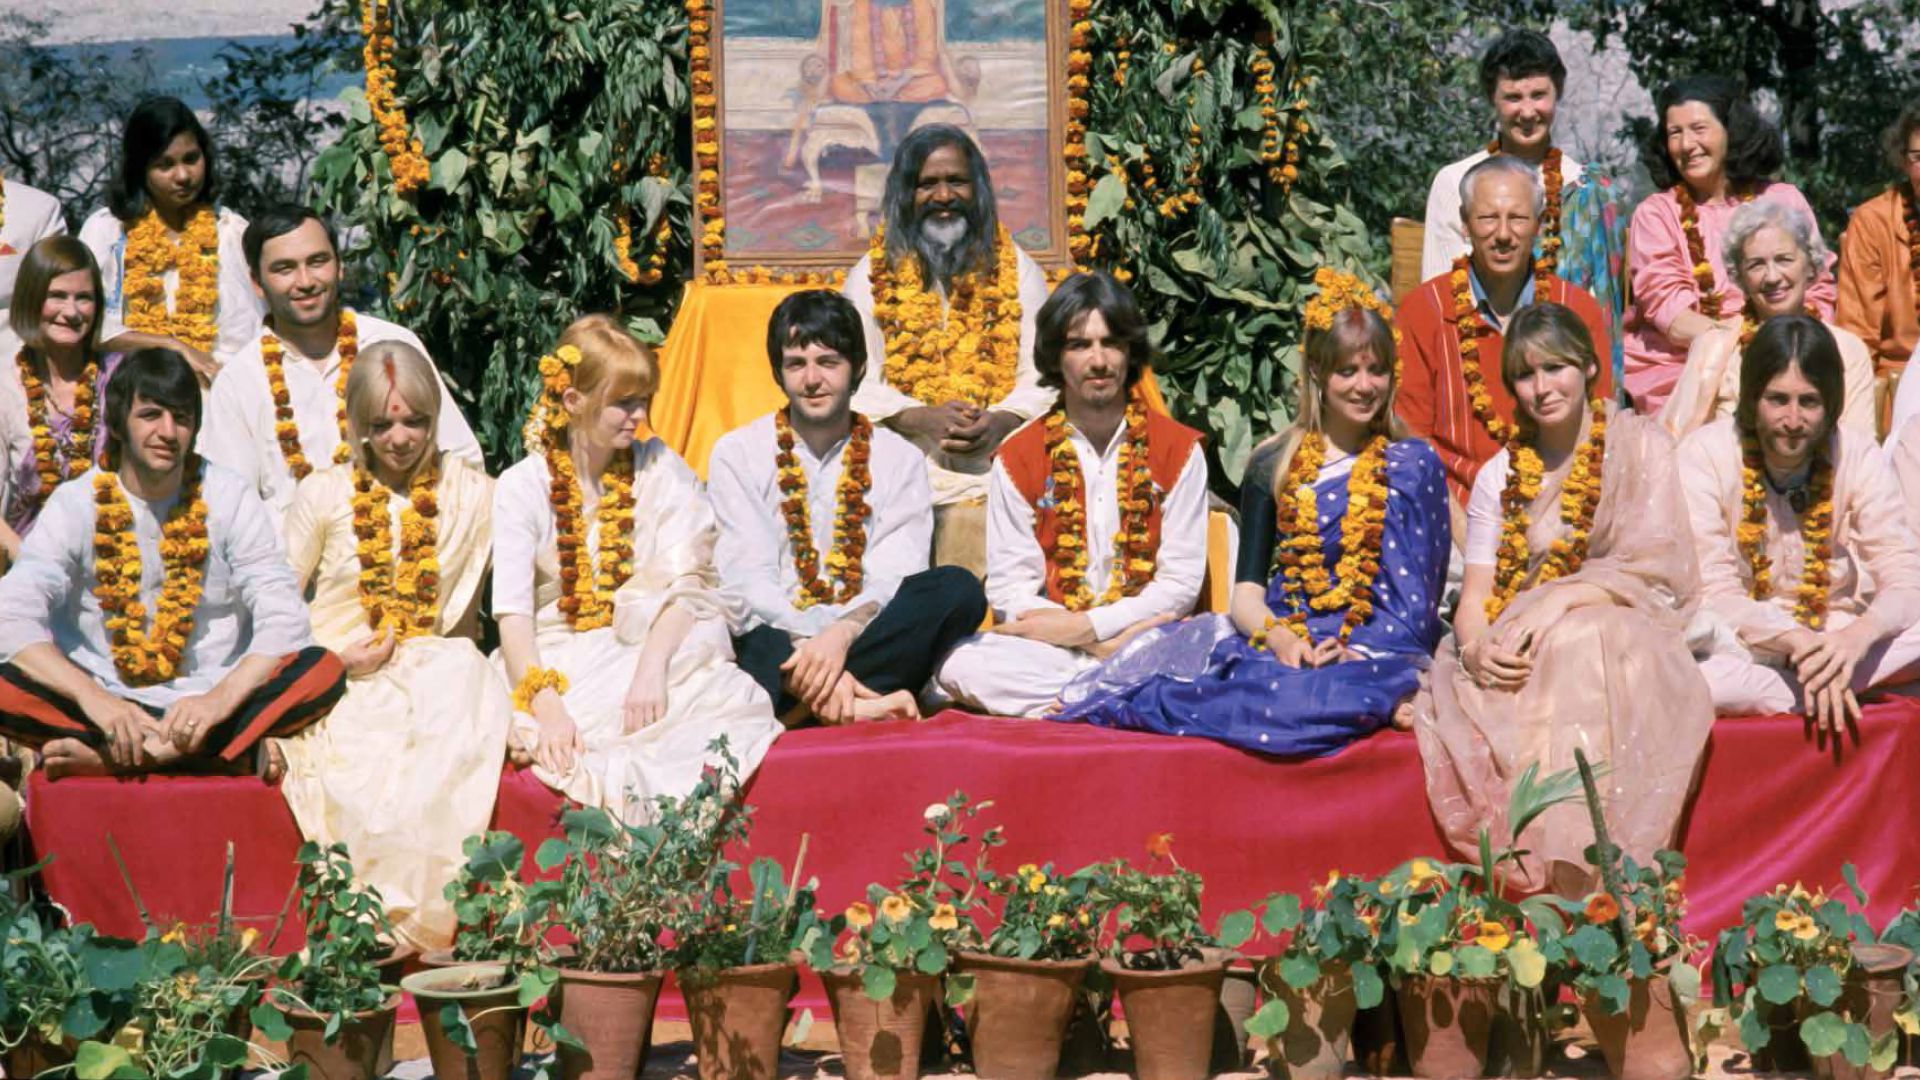 Los Beatles en la India: del 'White Album' al universo de Ravi Shankar